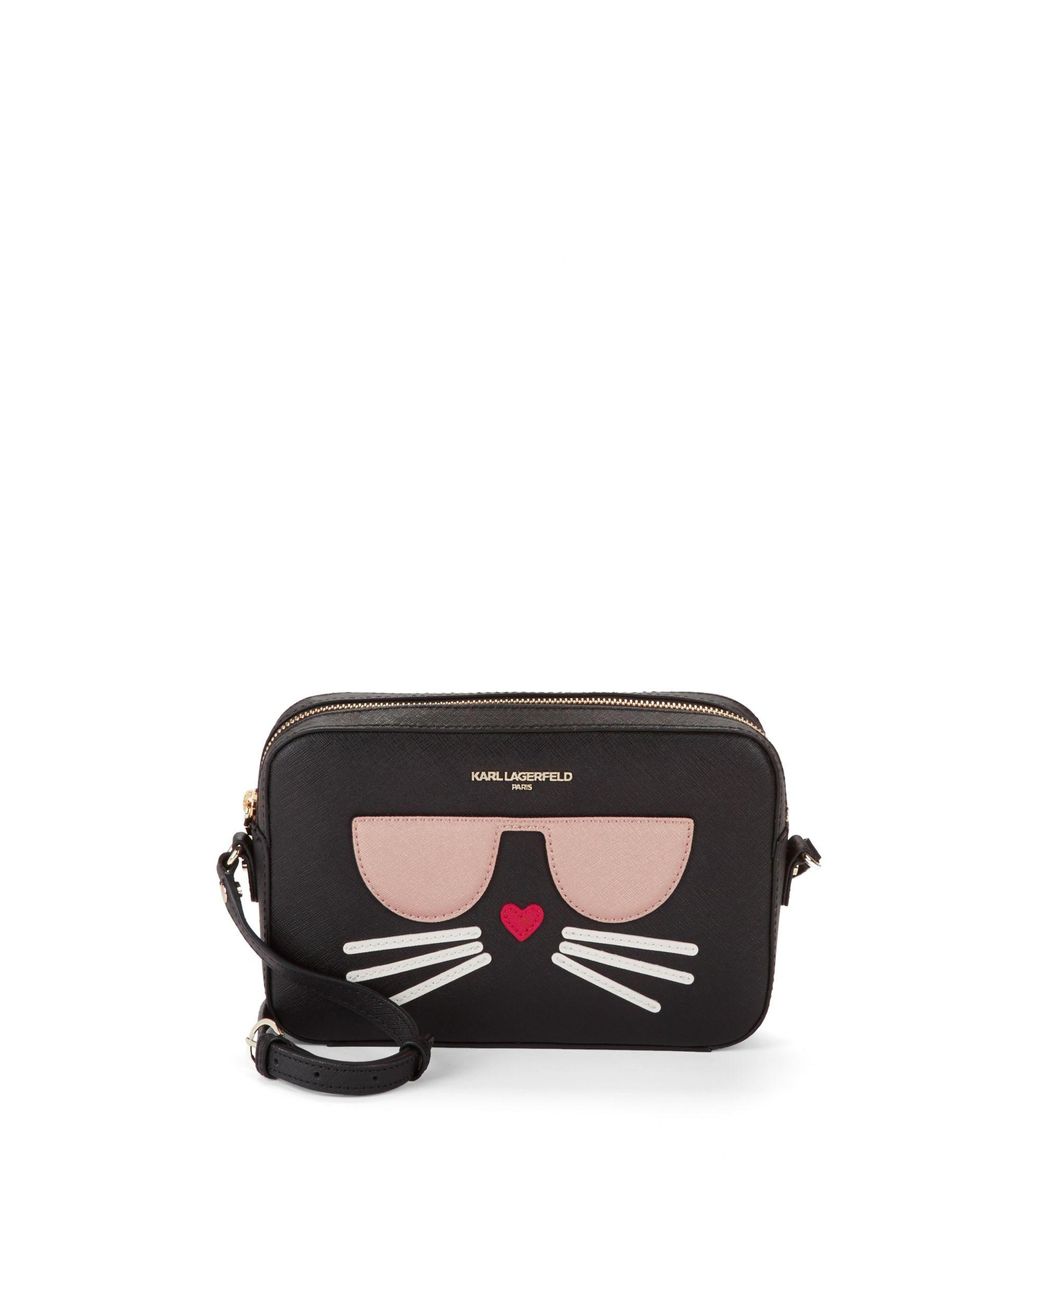 Karl Lagerfel mini bag | Cat bag, Karl lagerfeld, Bags